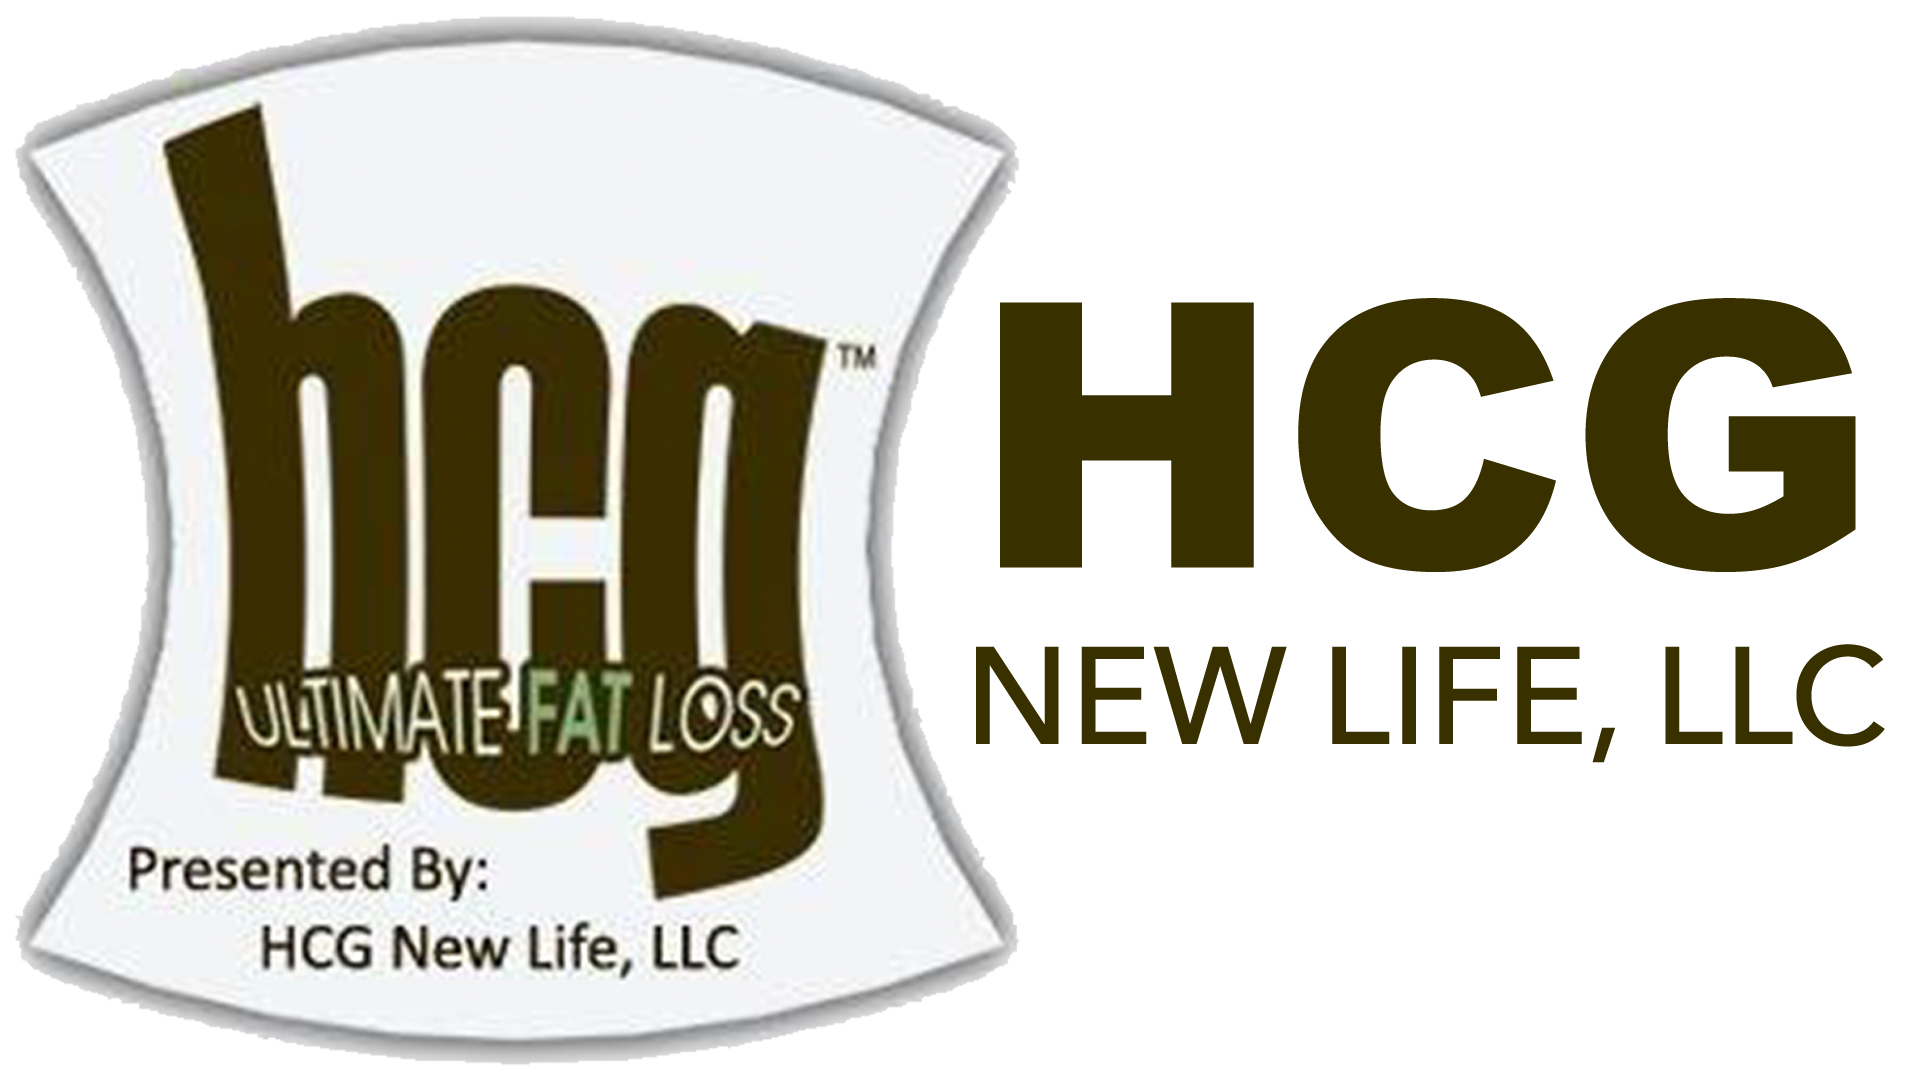 HCG New Life, LLC